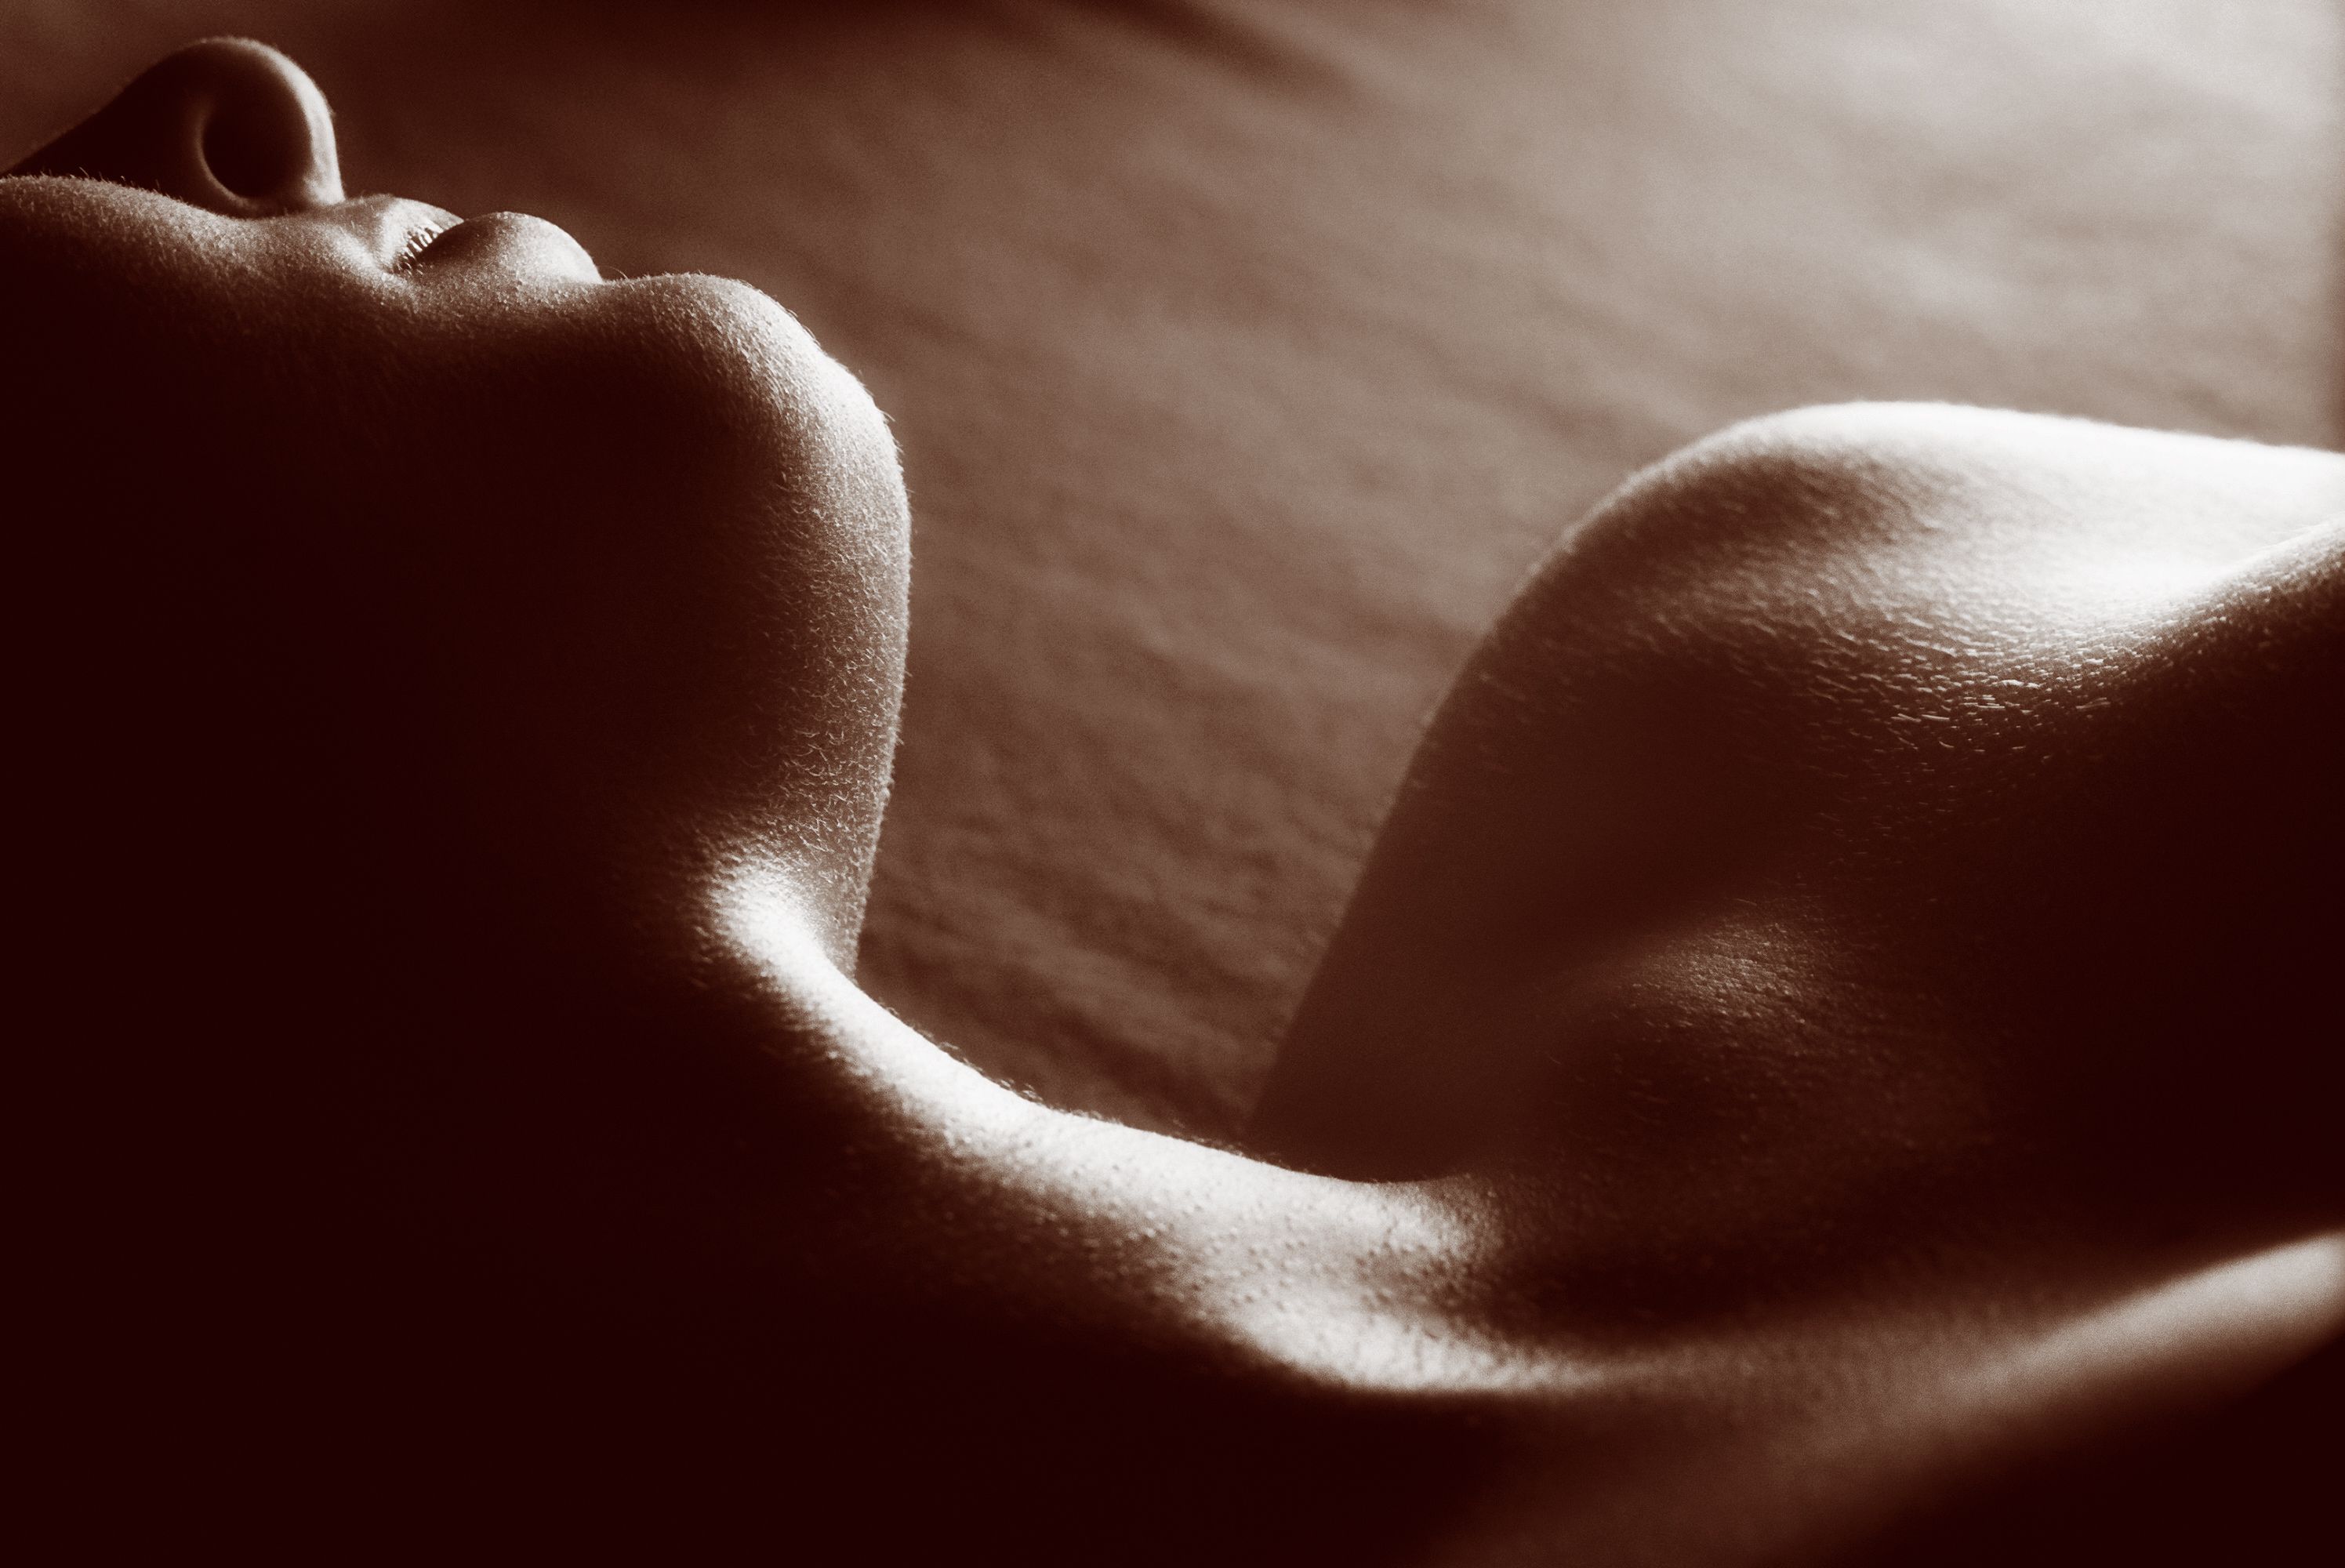 Active Nudist Blog - Free the nipple! Tumblr is bringing back nudity